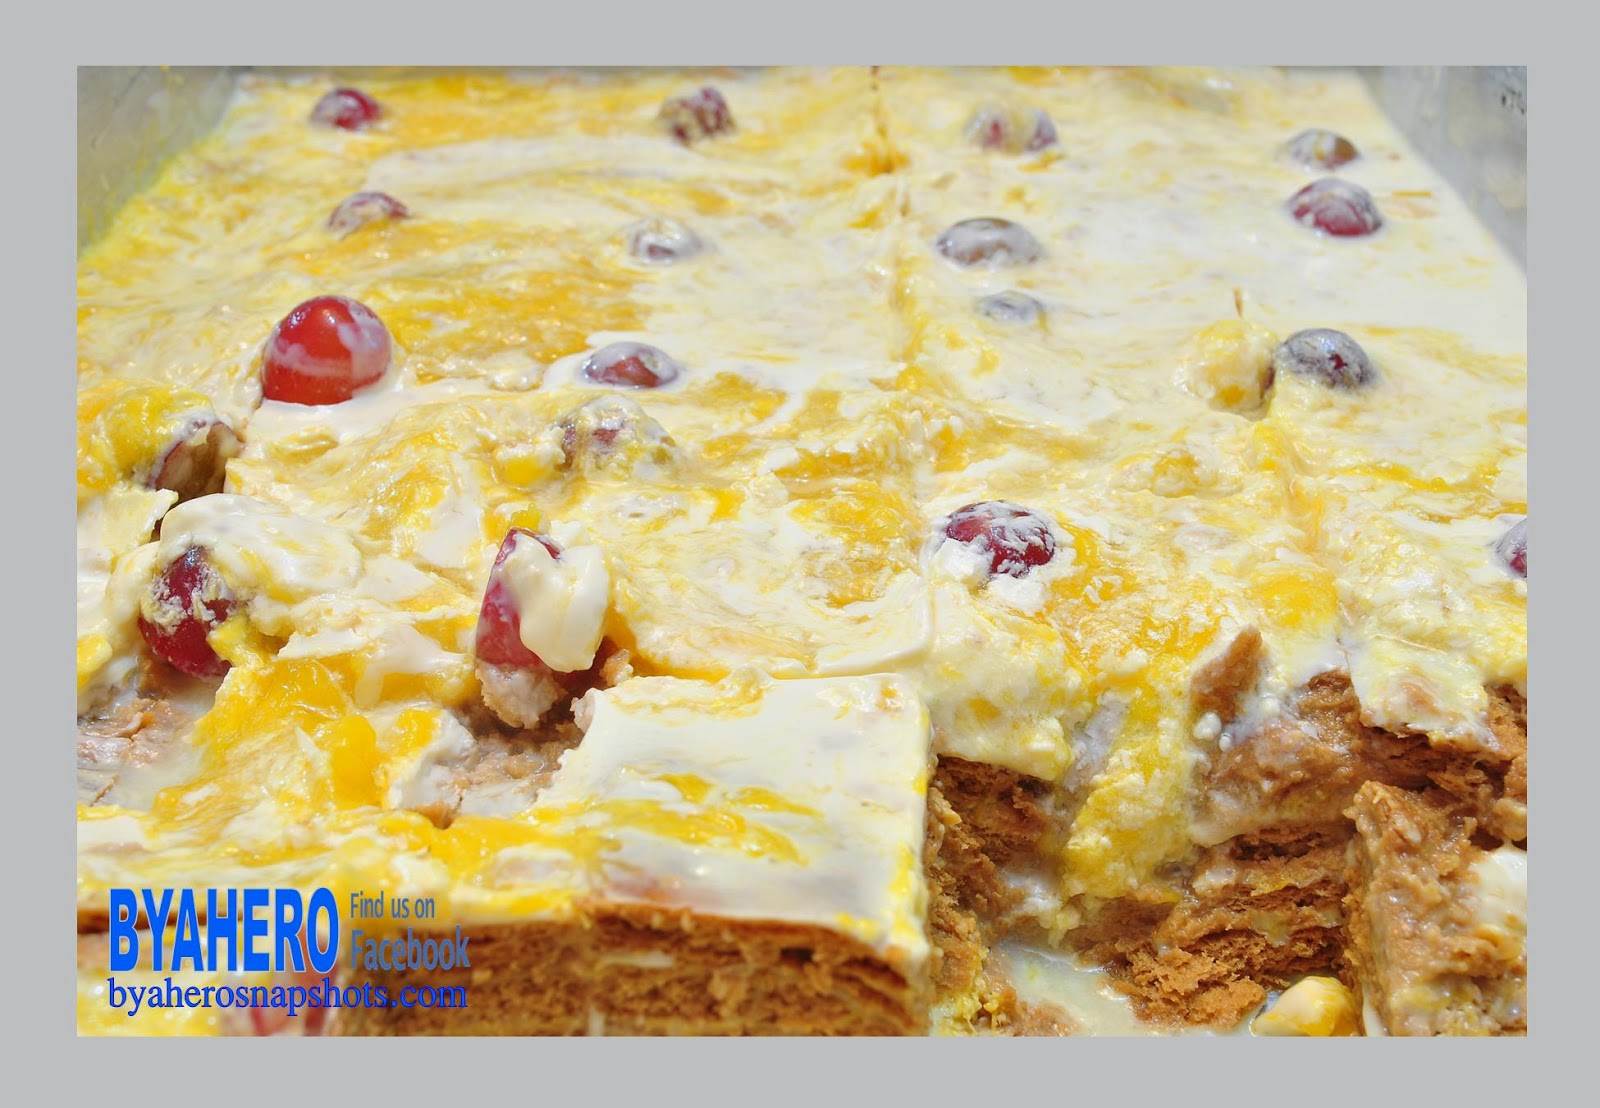 Byahero Graham Refrigerated Cake